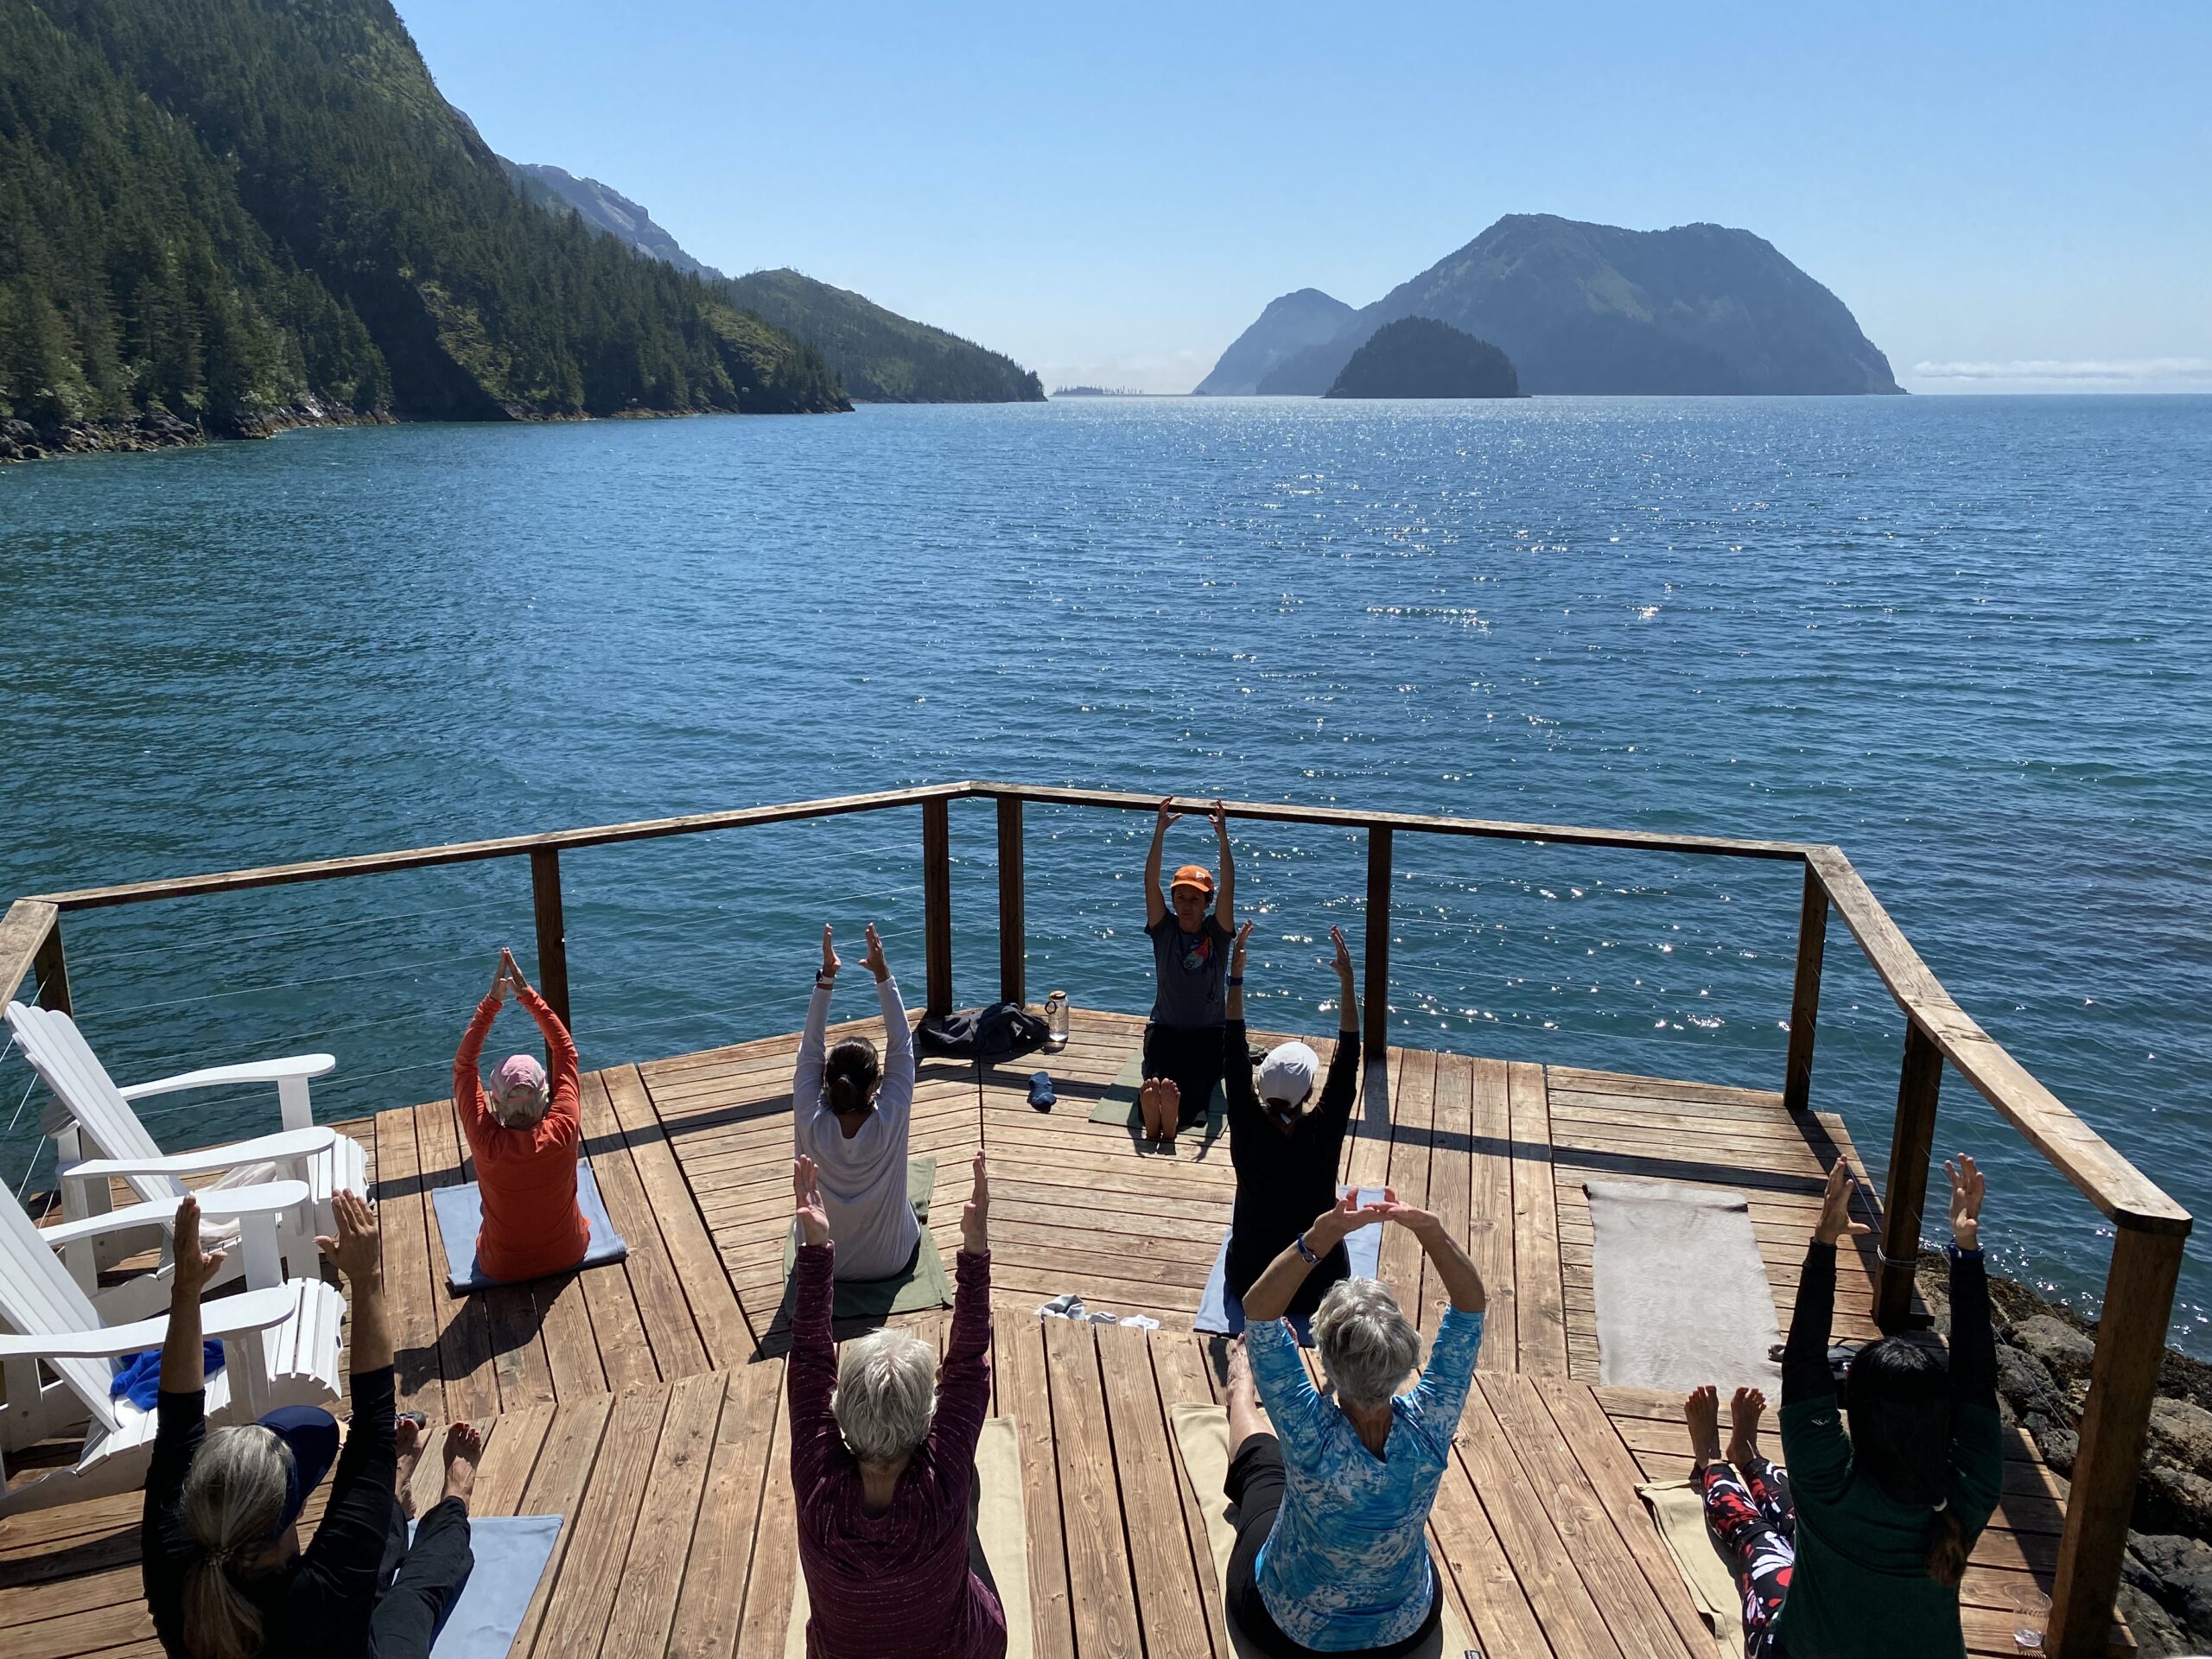 A group of women do yoga on a deck overlooking a lake in Alaska - Alaska: The Kenai Peninsula -Adventures in Good Company